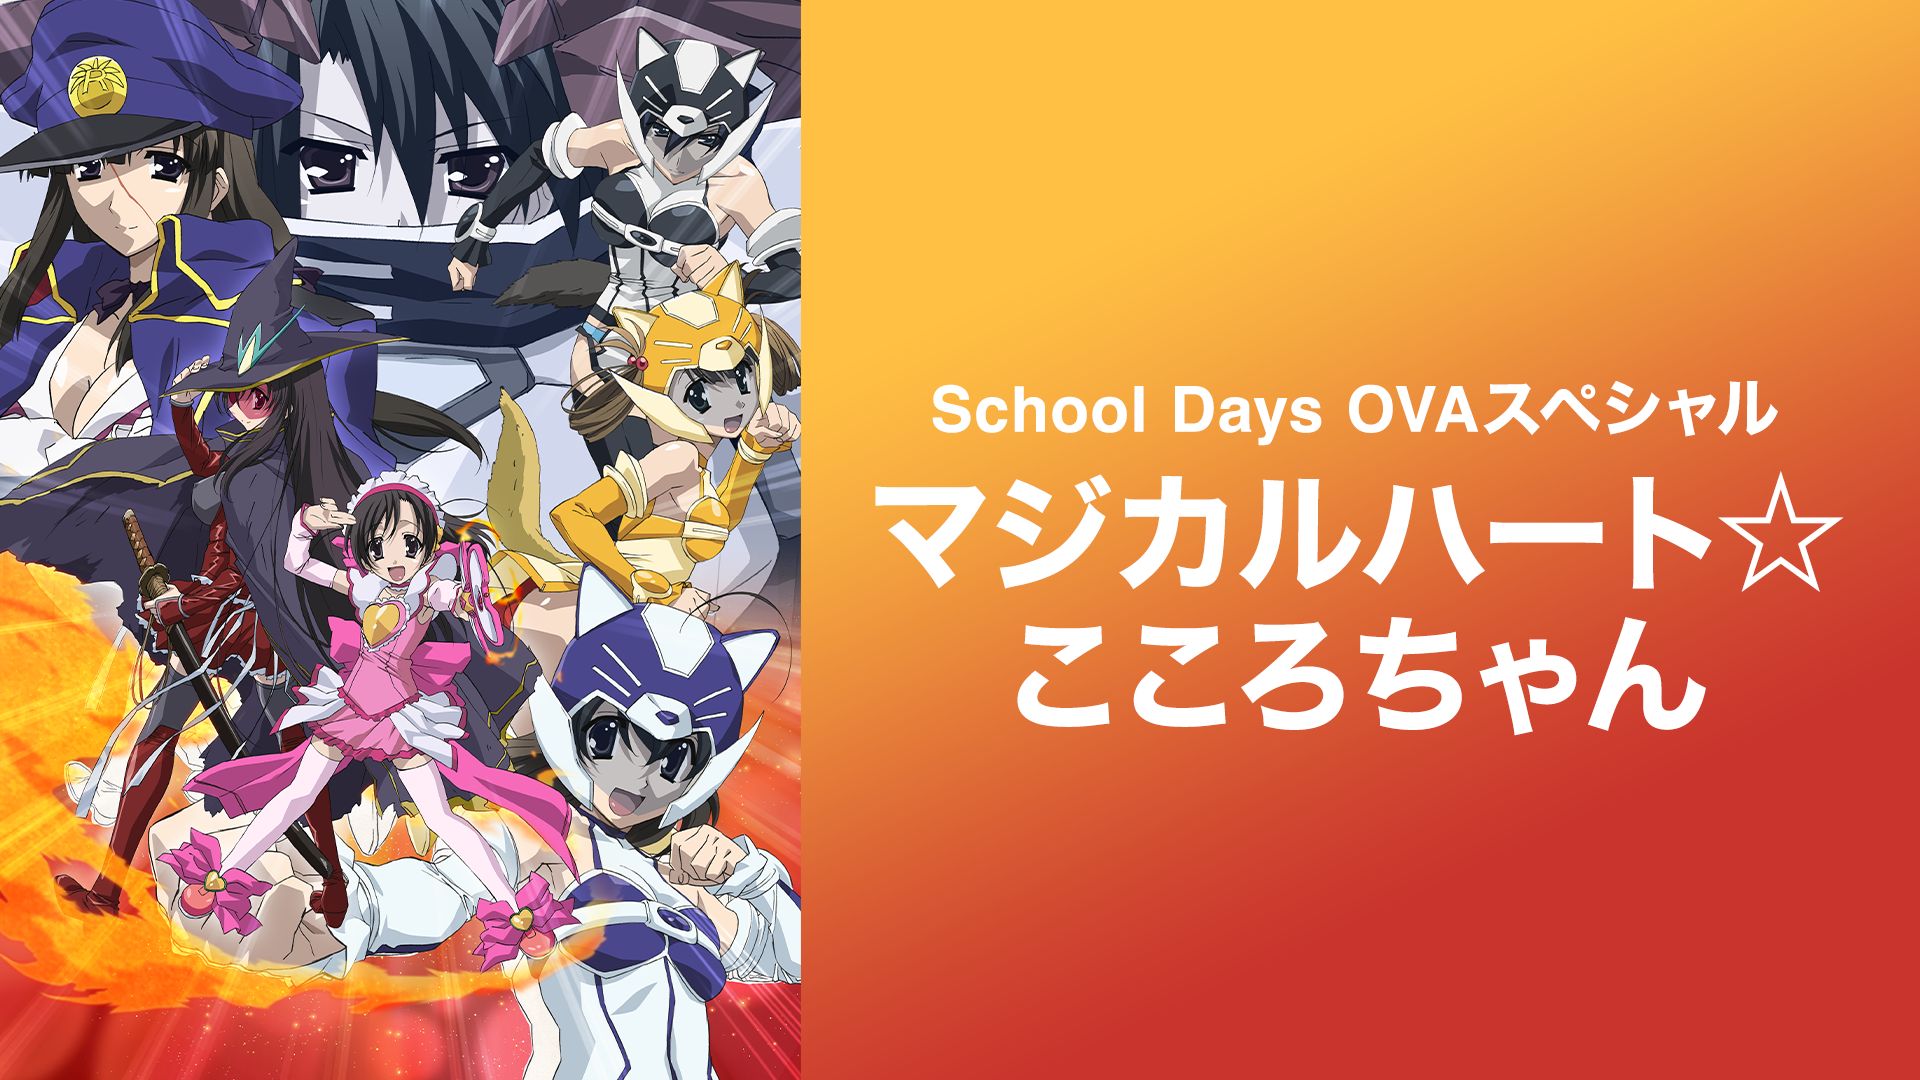 School Days <OVA>